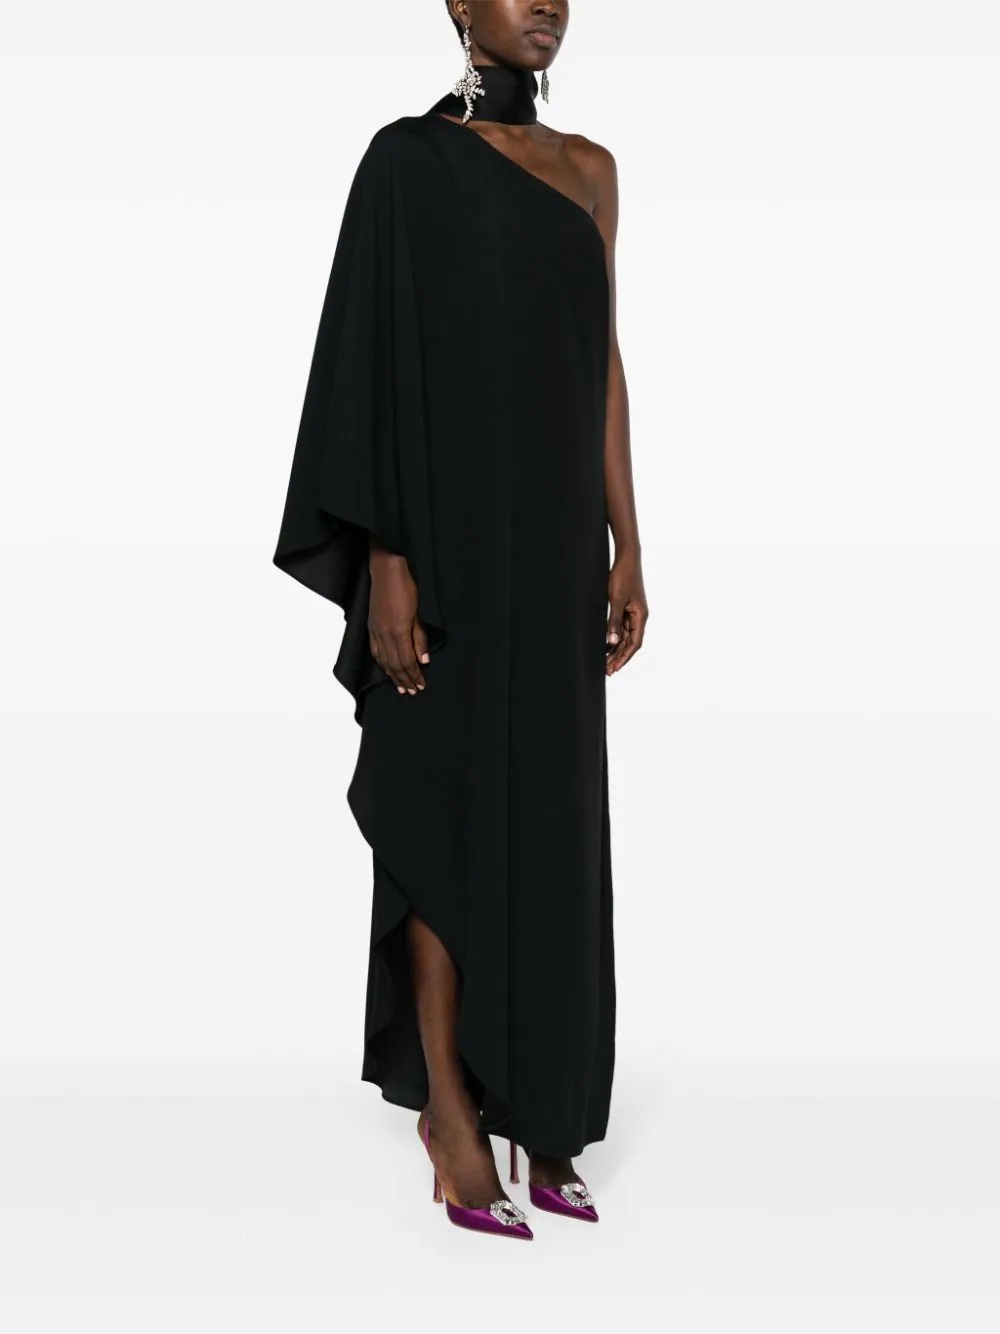 Taller Marmo black dress